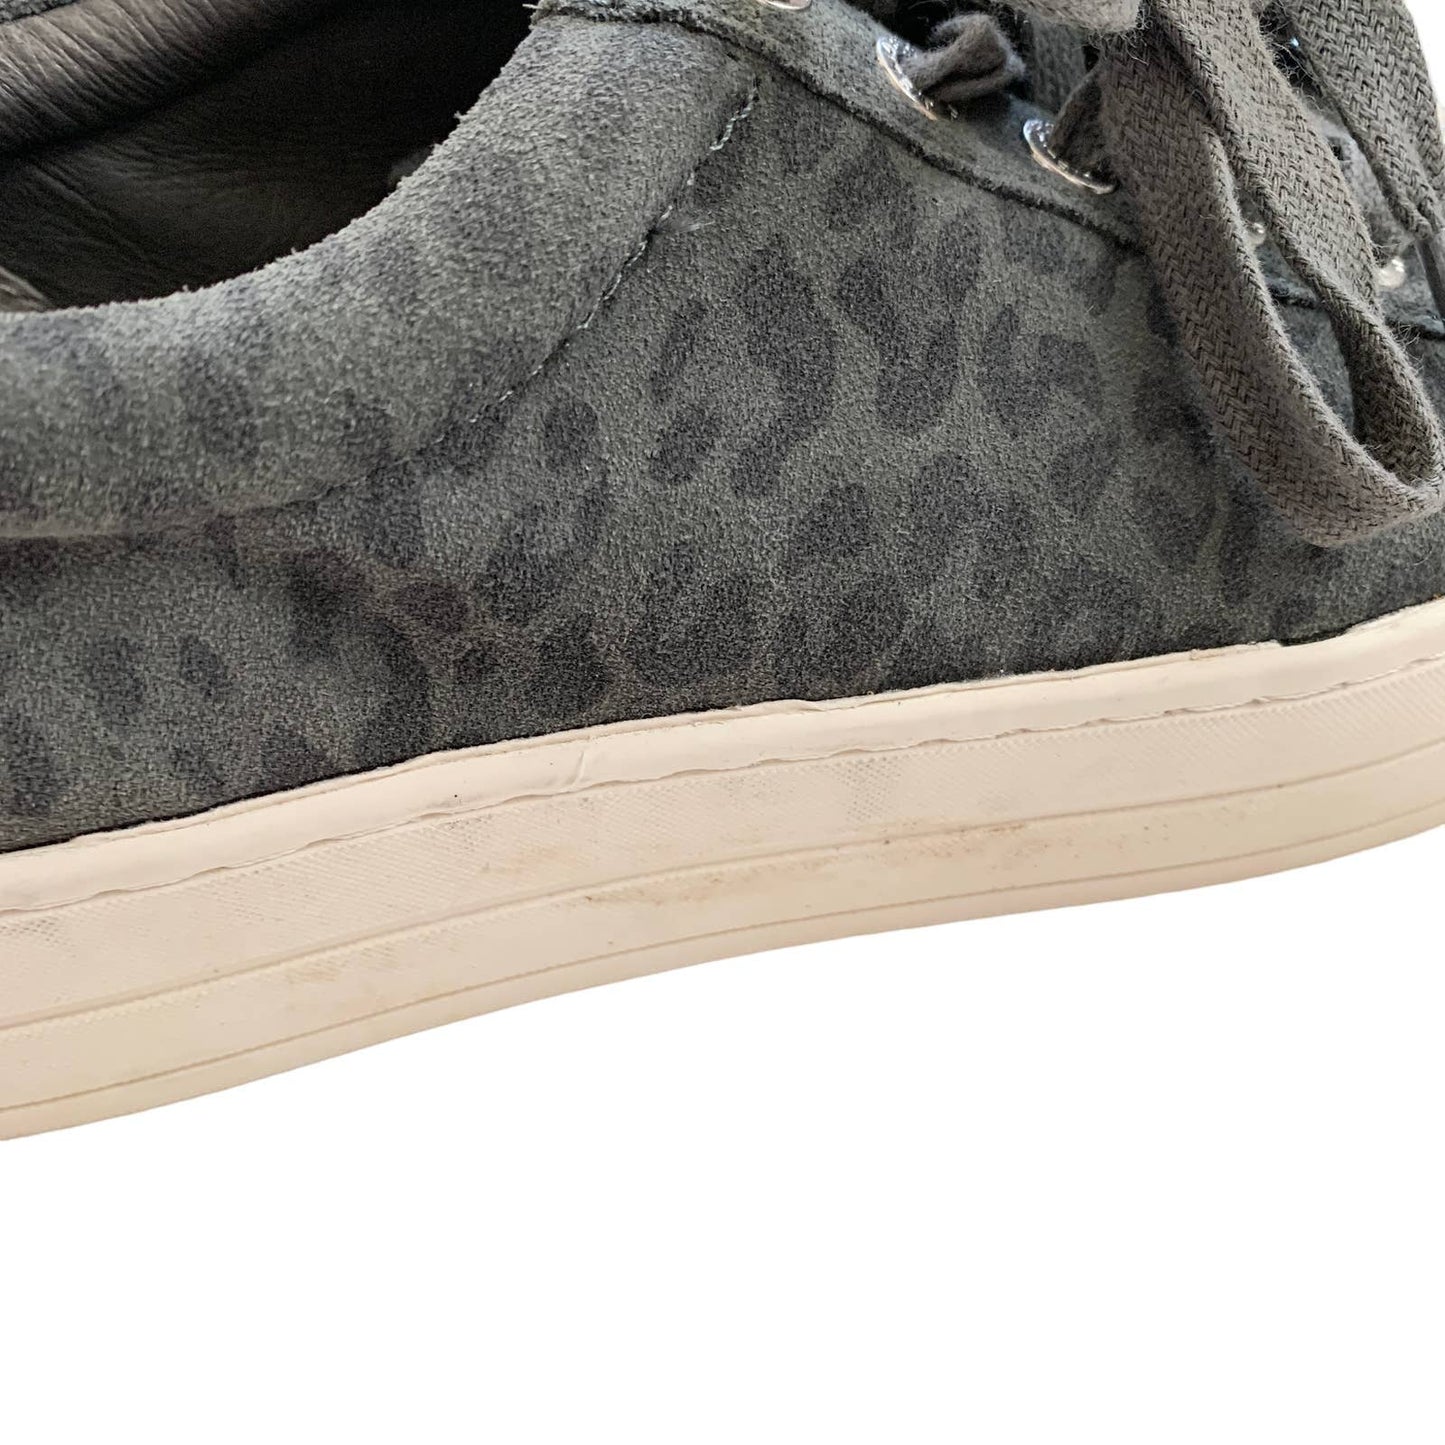 J / Slides Grey Suede Leopard Hippie Platform Sneakers 7.5